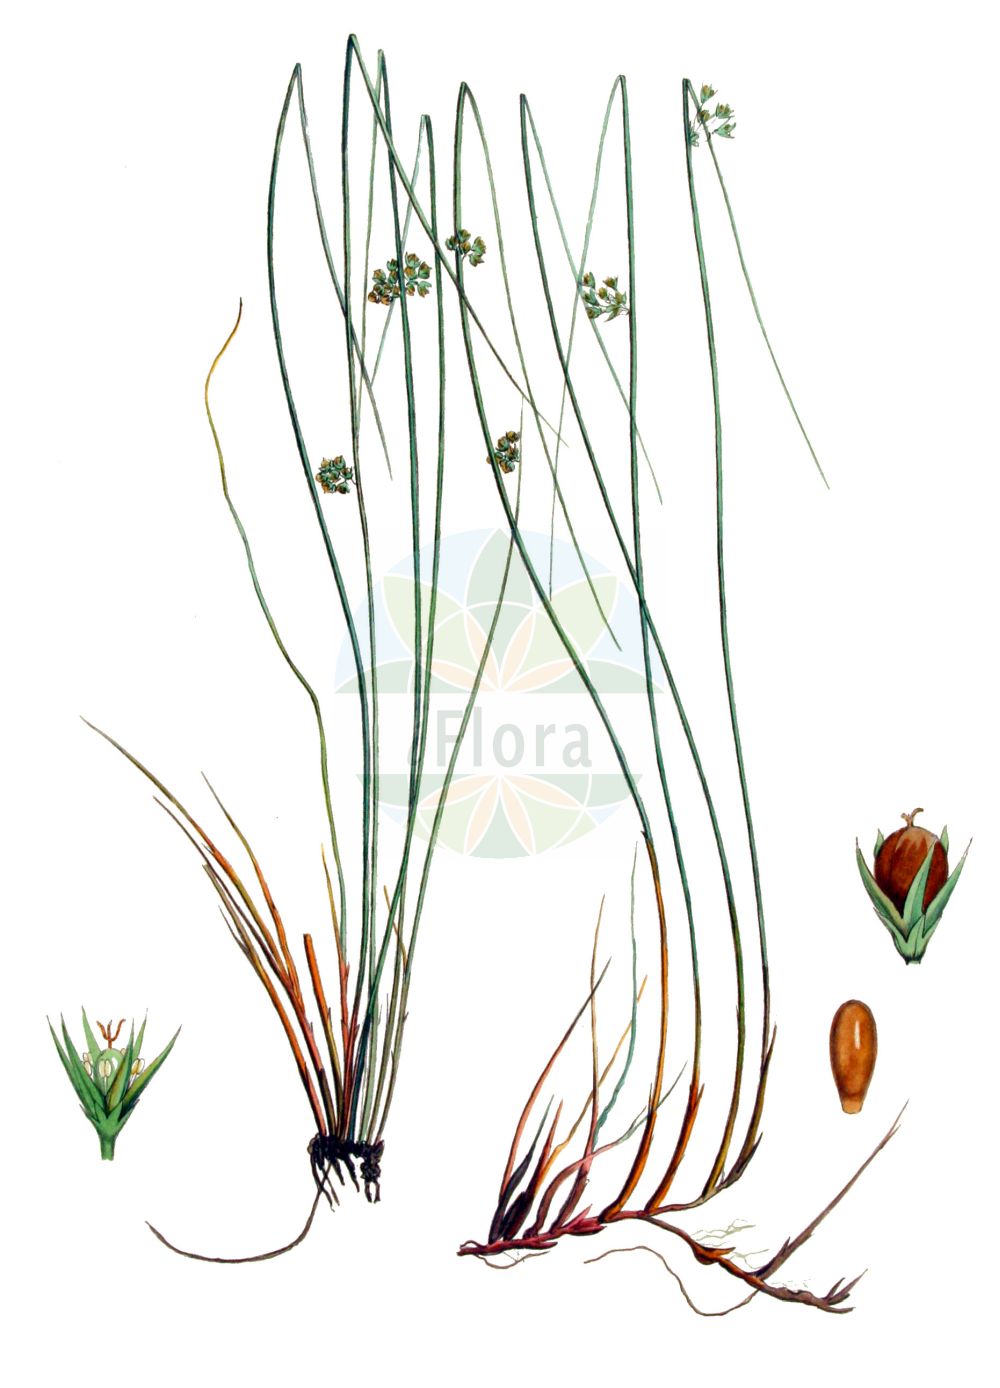 Historische Abbildung von Juncus filiformis (Faden-Binse - Thread Rush). Das Bild zeigt Blatt, Bluete, Frucht und Same. ---- Historical Drawing of Juncus filiformis (Faden-Binse - Thread Rush). The image is showing leaf, flower, fruit and seed.(Juncus filiformis,Faden-Binse,Thread Rush,Juncus filiformis,Juncus transsilvanicus,Faden-Binse,Faden-Simse,Thread Rush,Juncus,Binse,Rush,Juncaceae,Binsengewächse,Rush family,Blatt,Bluete,Frucht,Same,leaf,flower,fruit,seed,Kops (1800-1934))